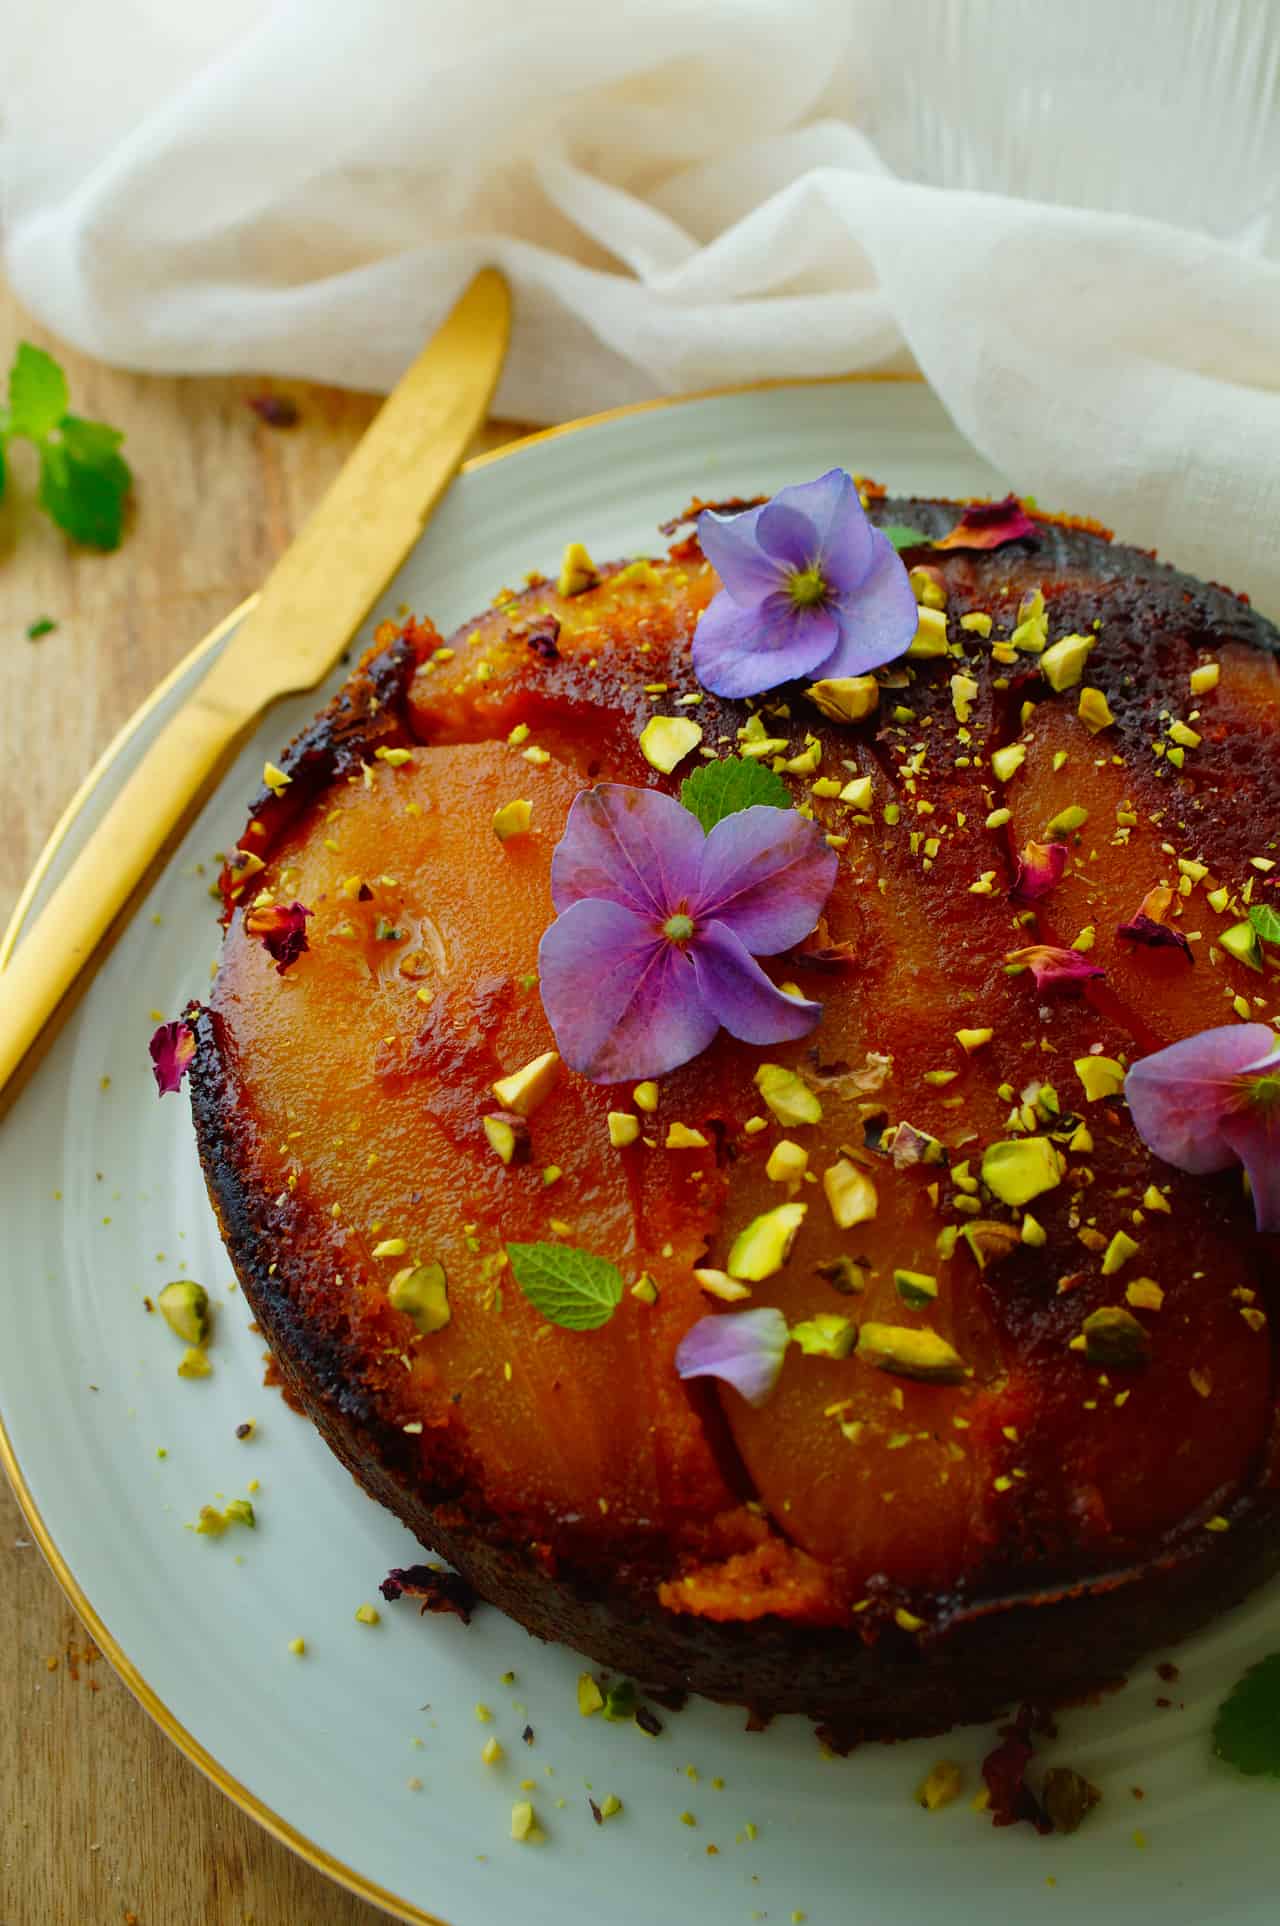 vredig woordenboek huiswerk Omgekeerde perencake met speculaasijs | ELien's Cuisine - Lekkere en  eenvoudige recepten